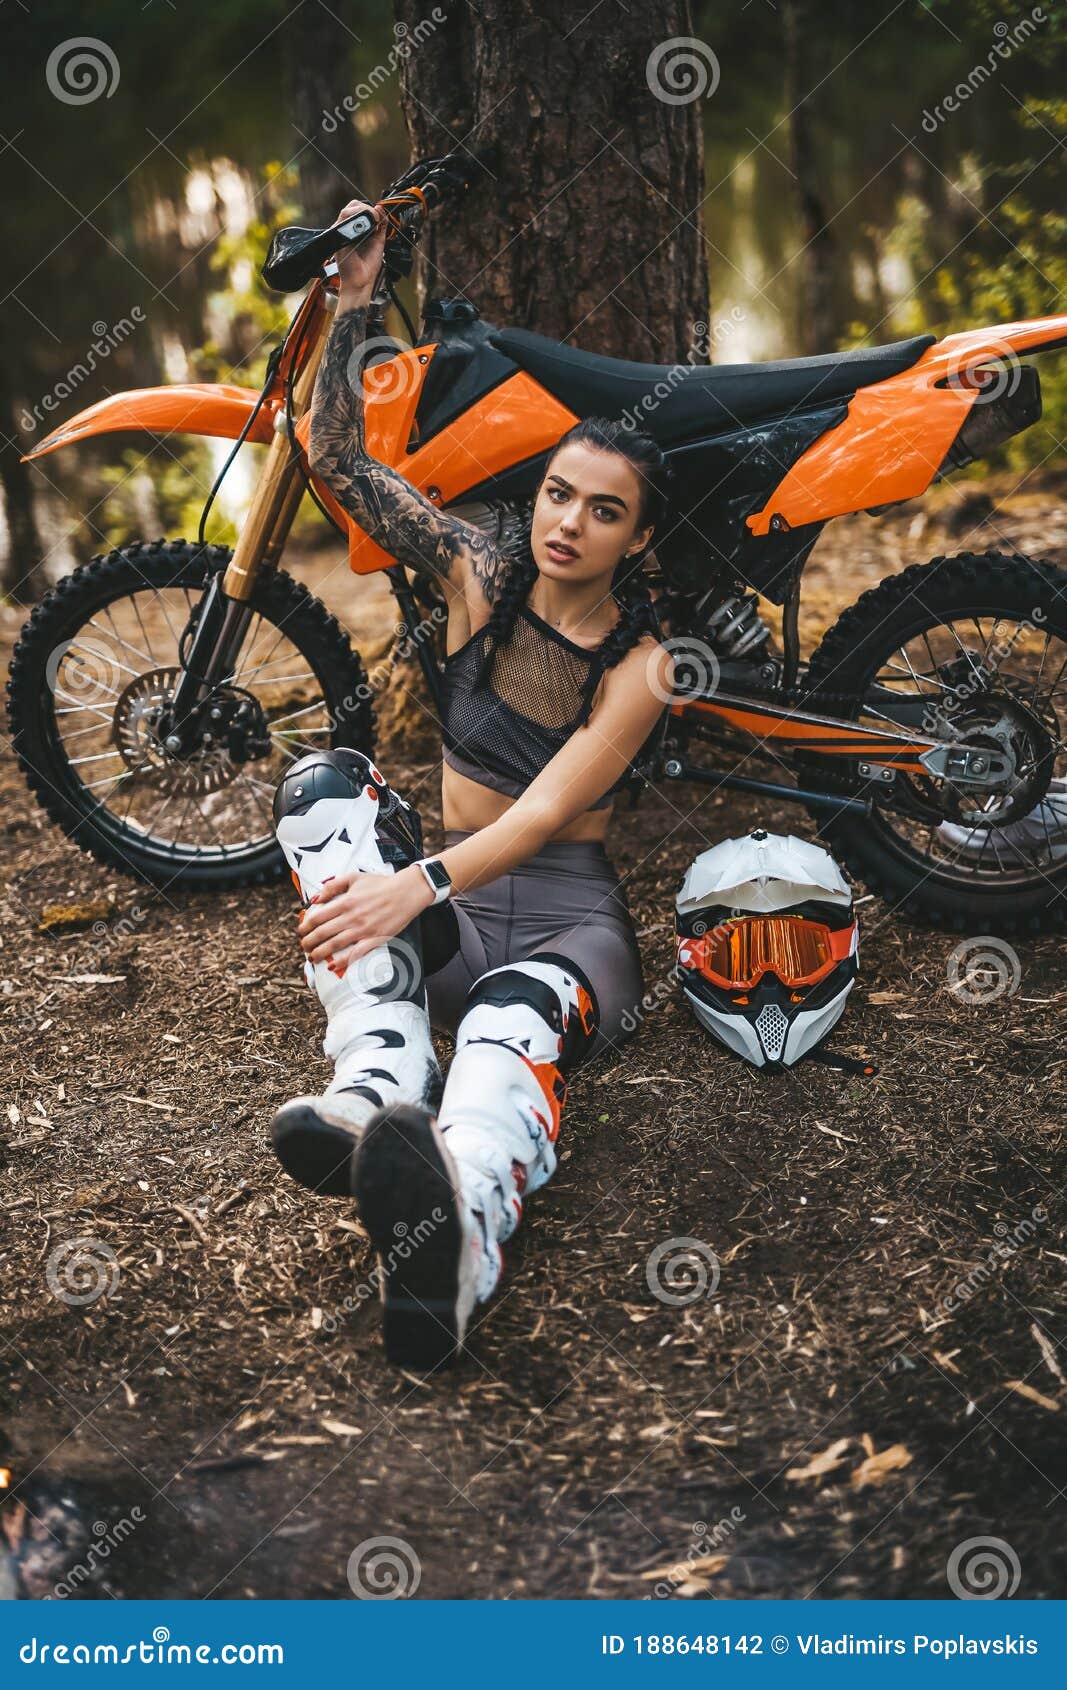 balqis rashid recommends Nude On Dirt Bike